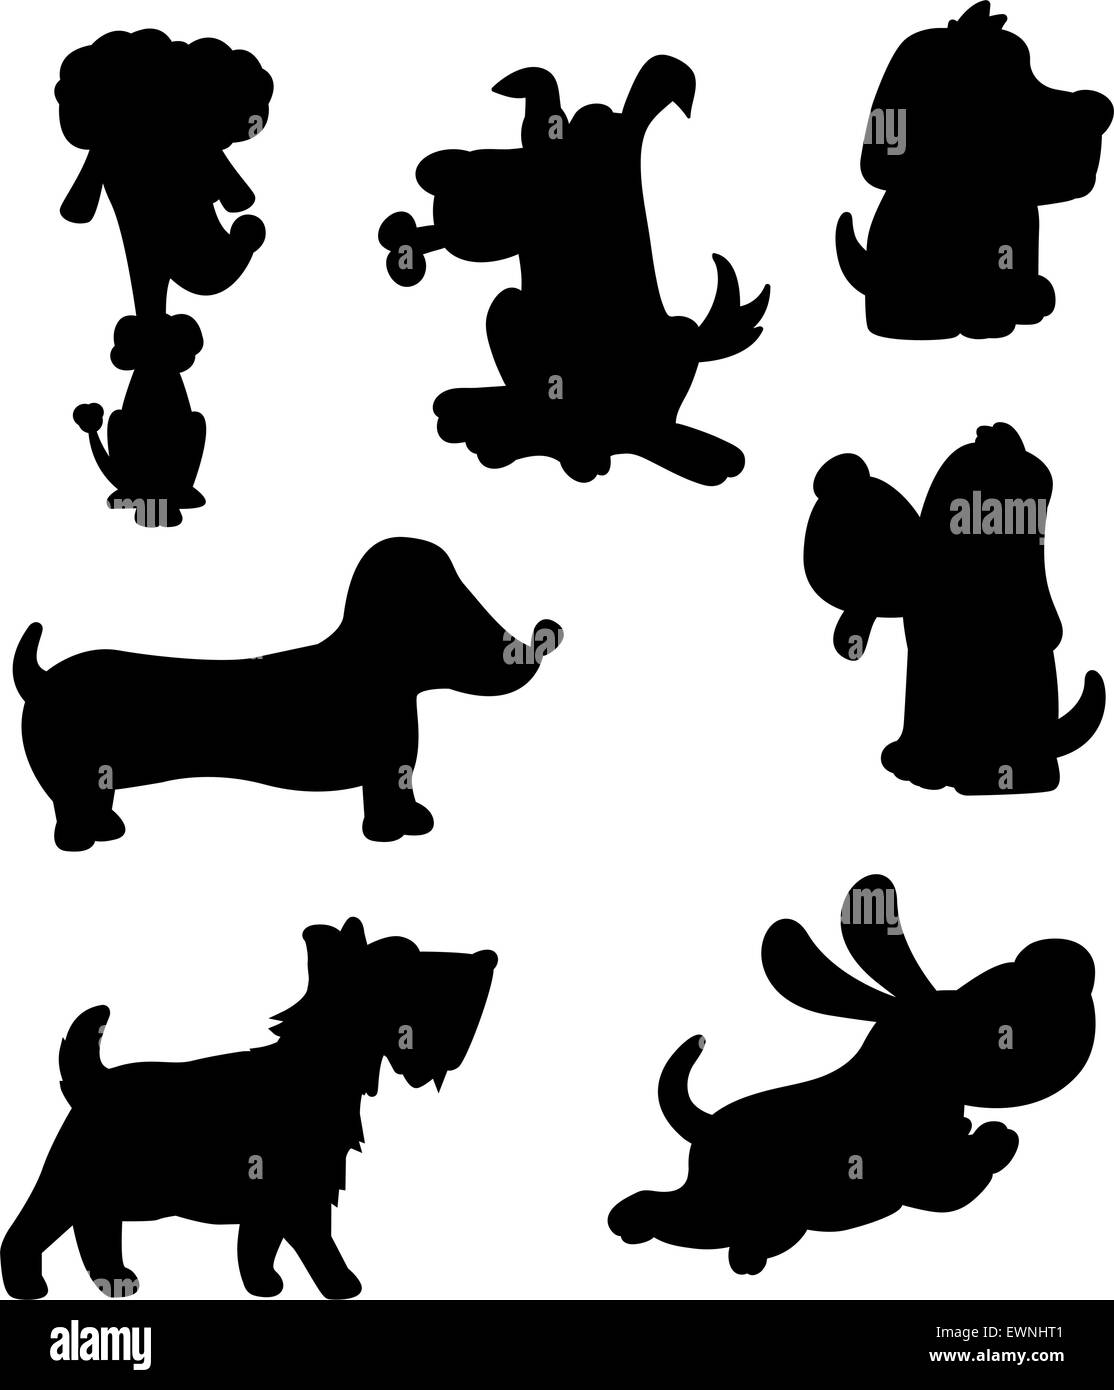 Cartoon dog Black and White Stock Photos & Images - Alamy